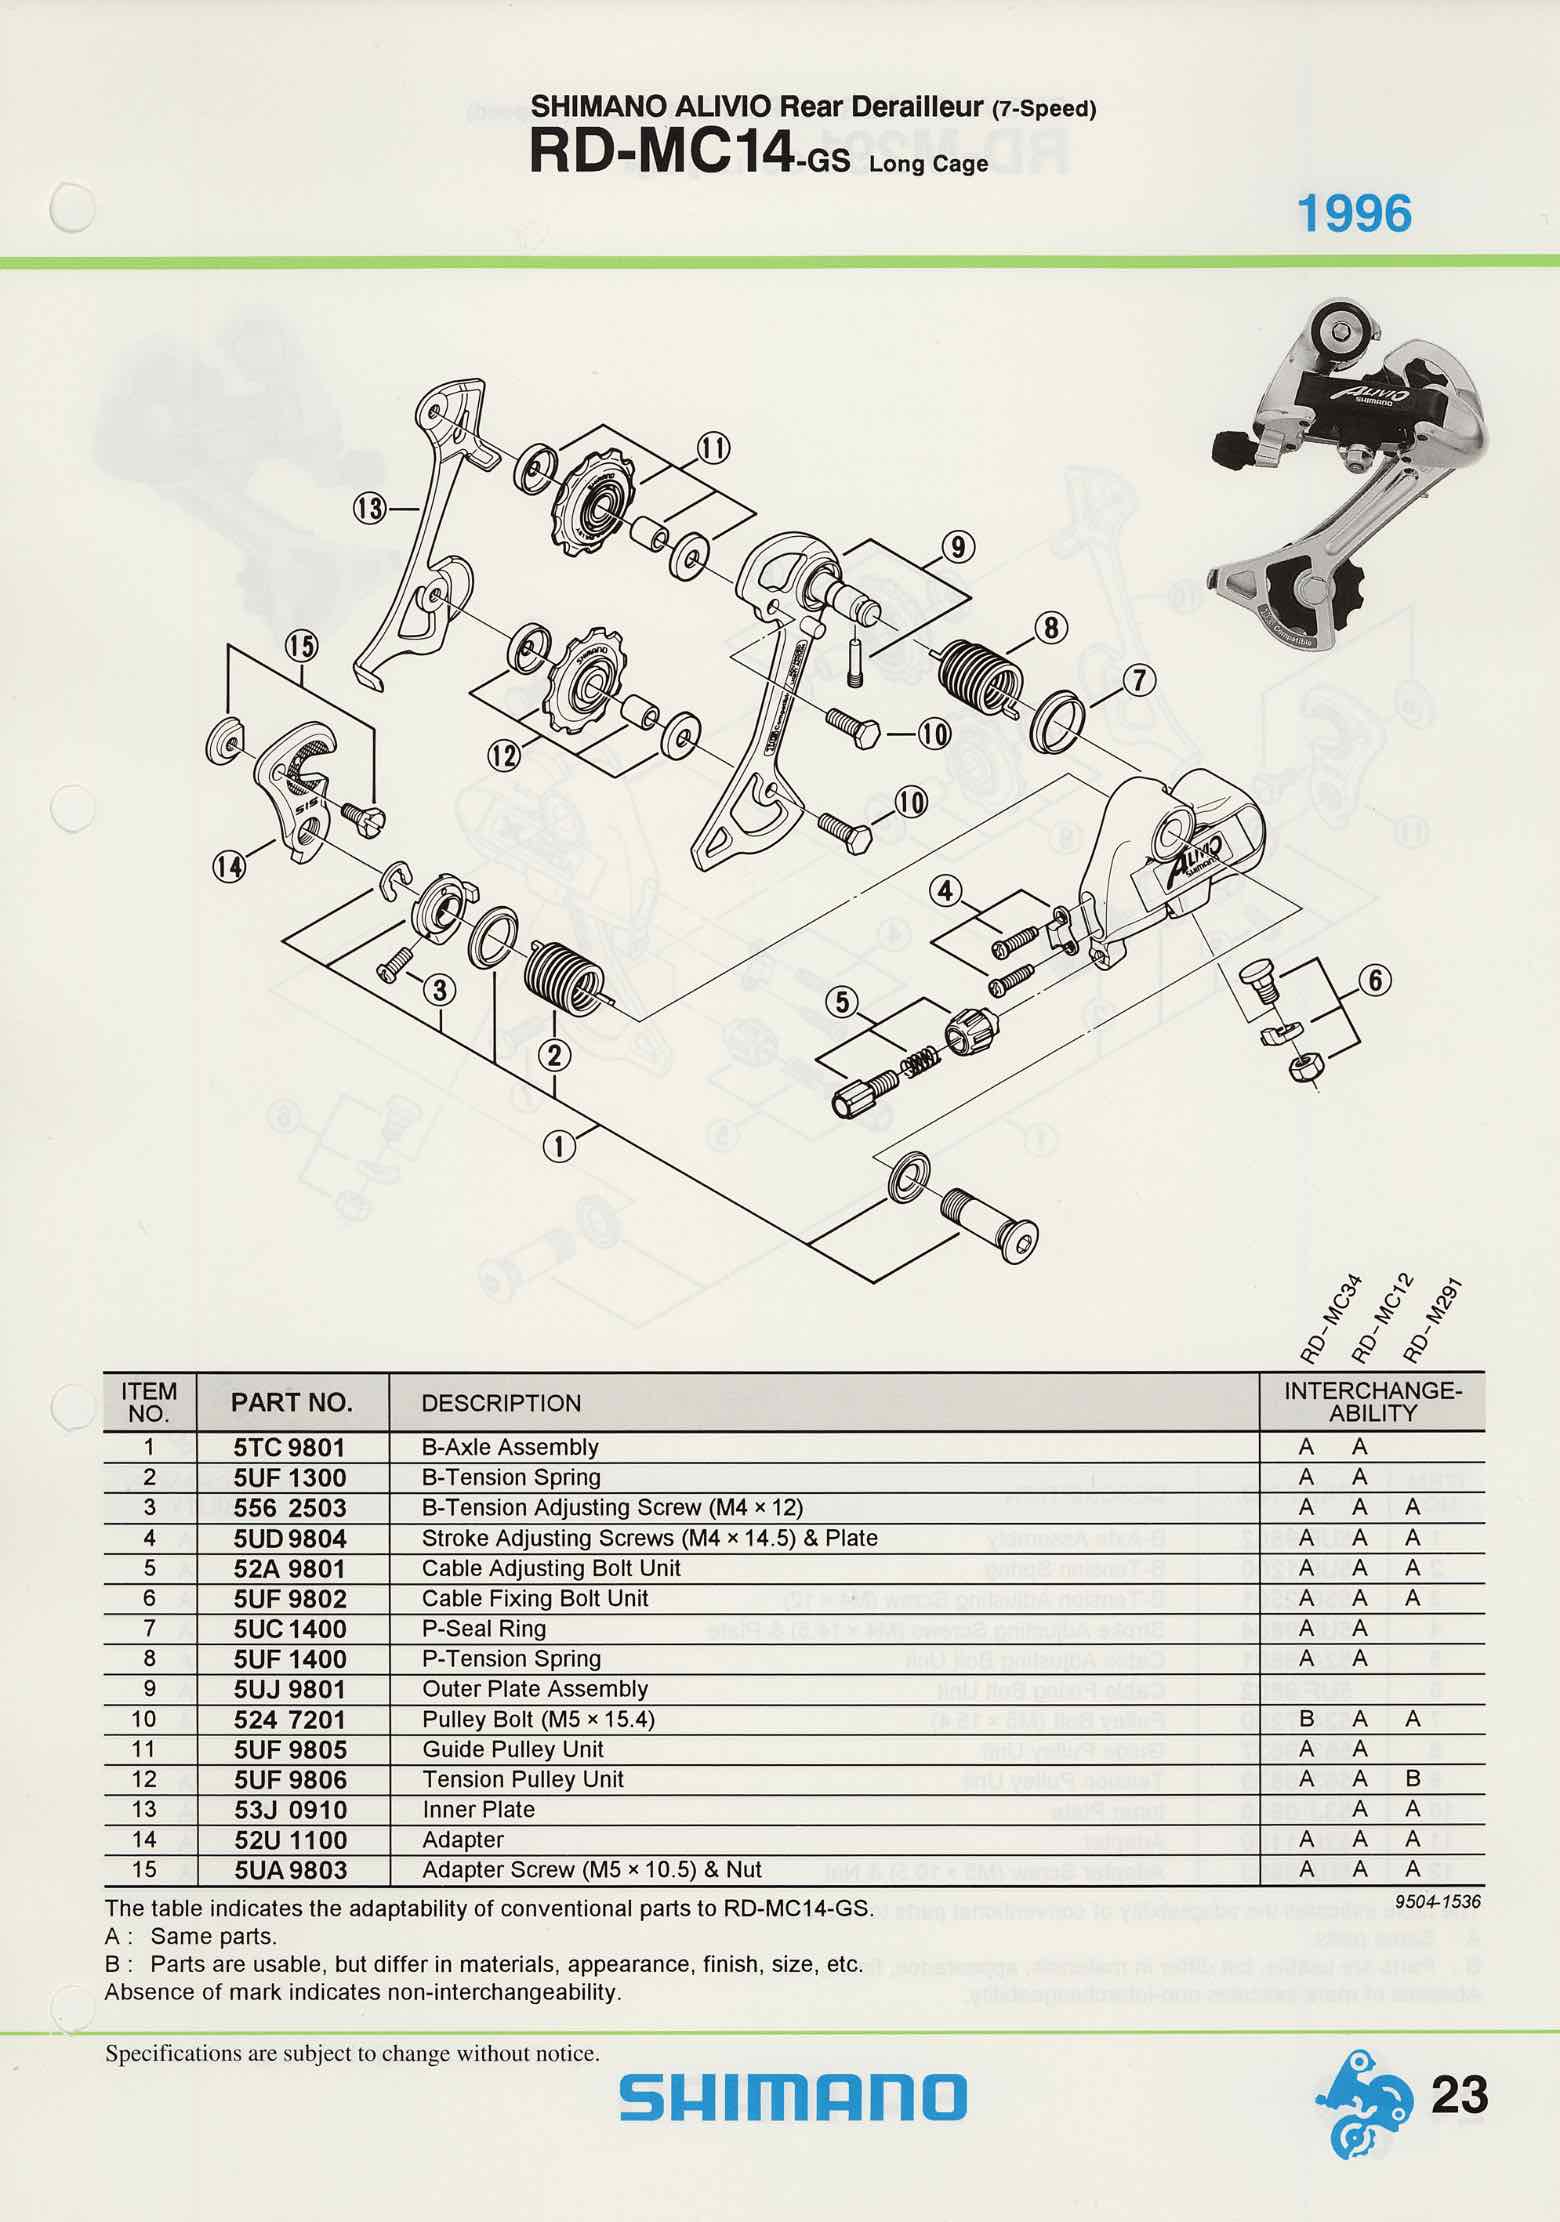 Shimano Spare Parts Catalogue - 1994 to 2004 s5 p23 main image